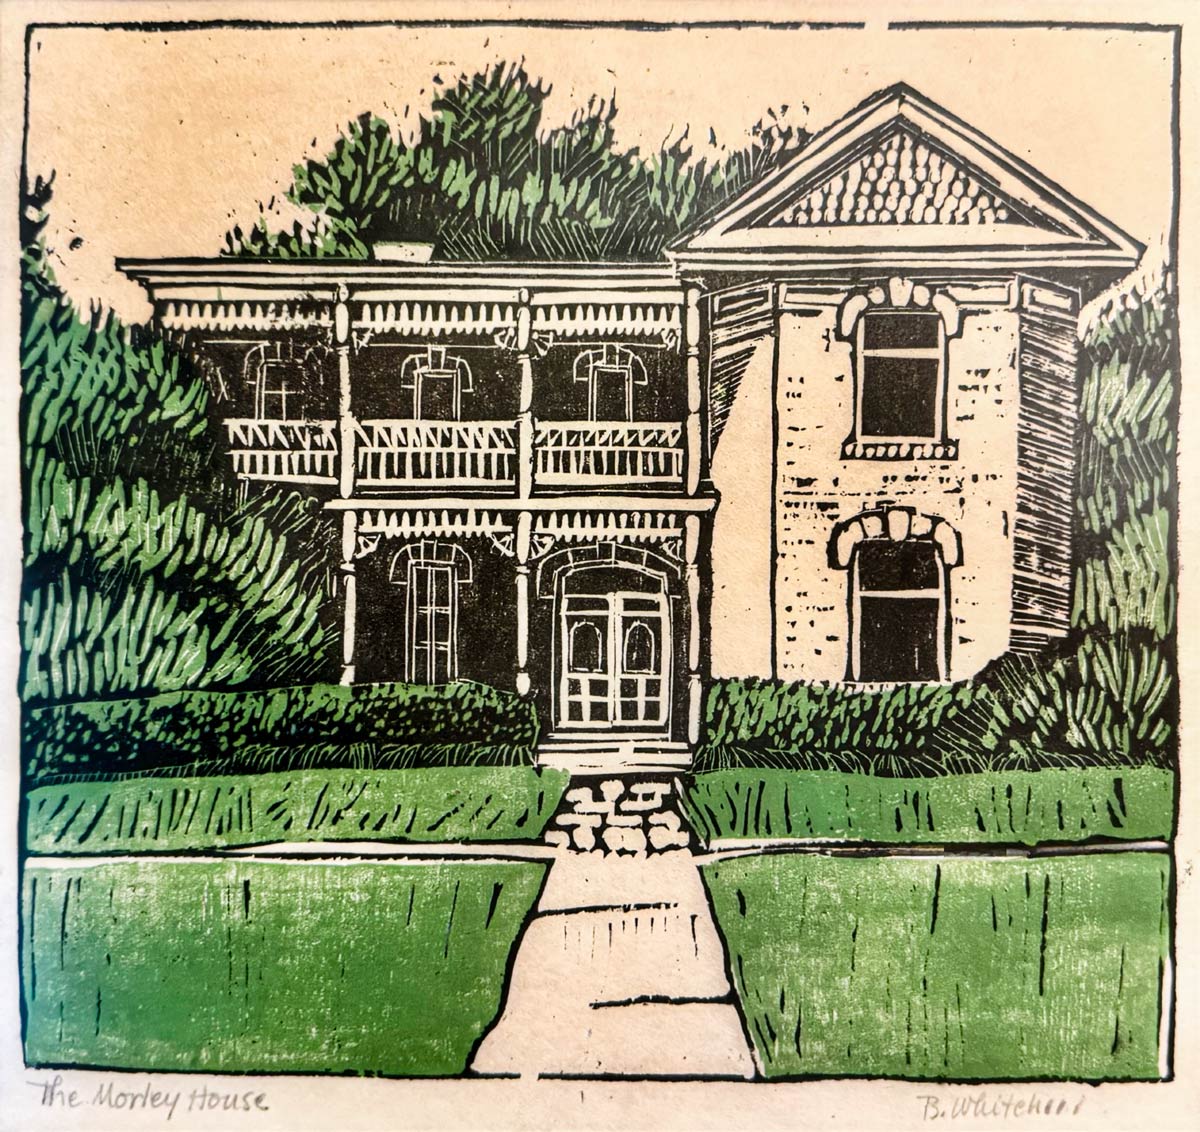 The Raymond-Morley House woodcut print